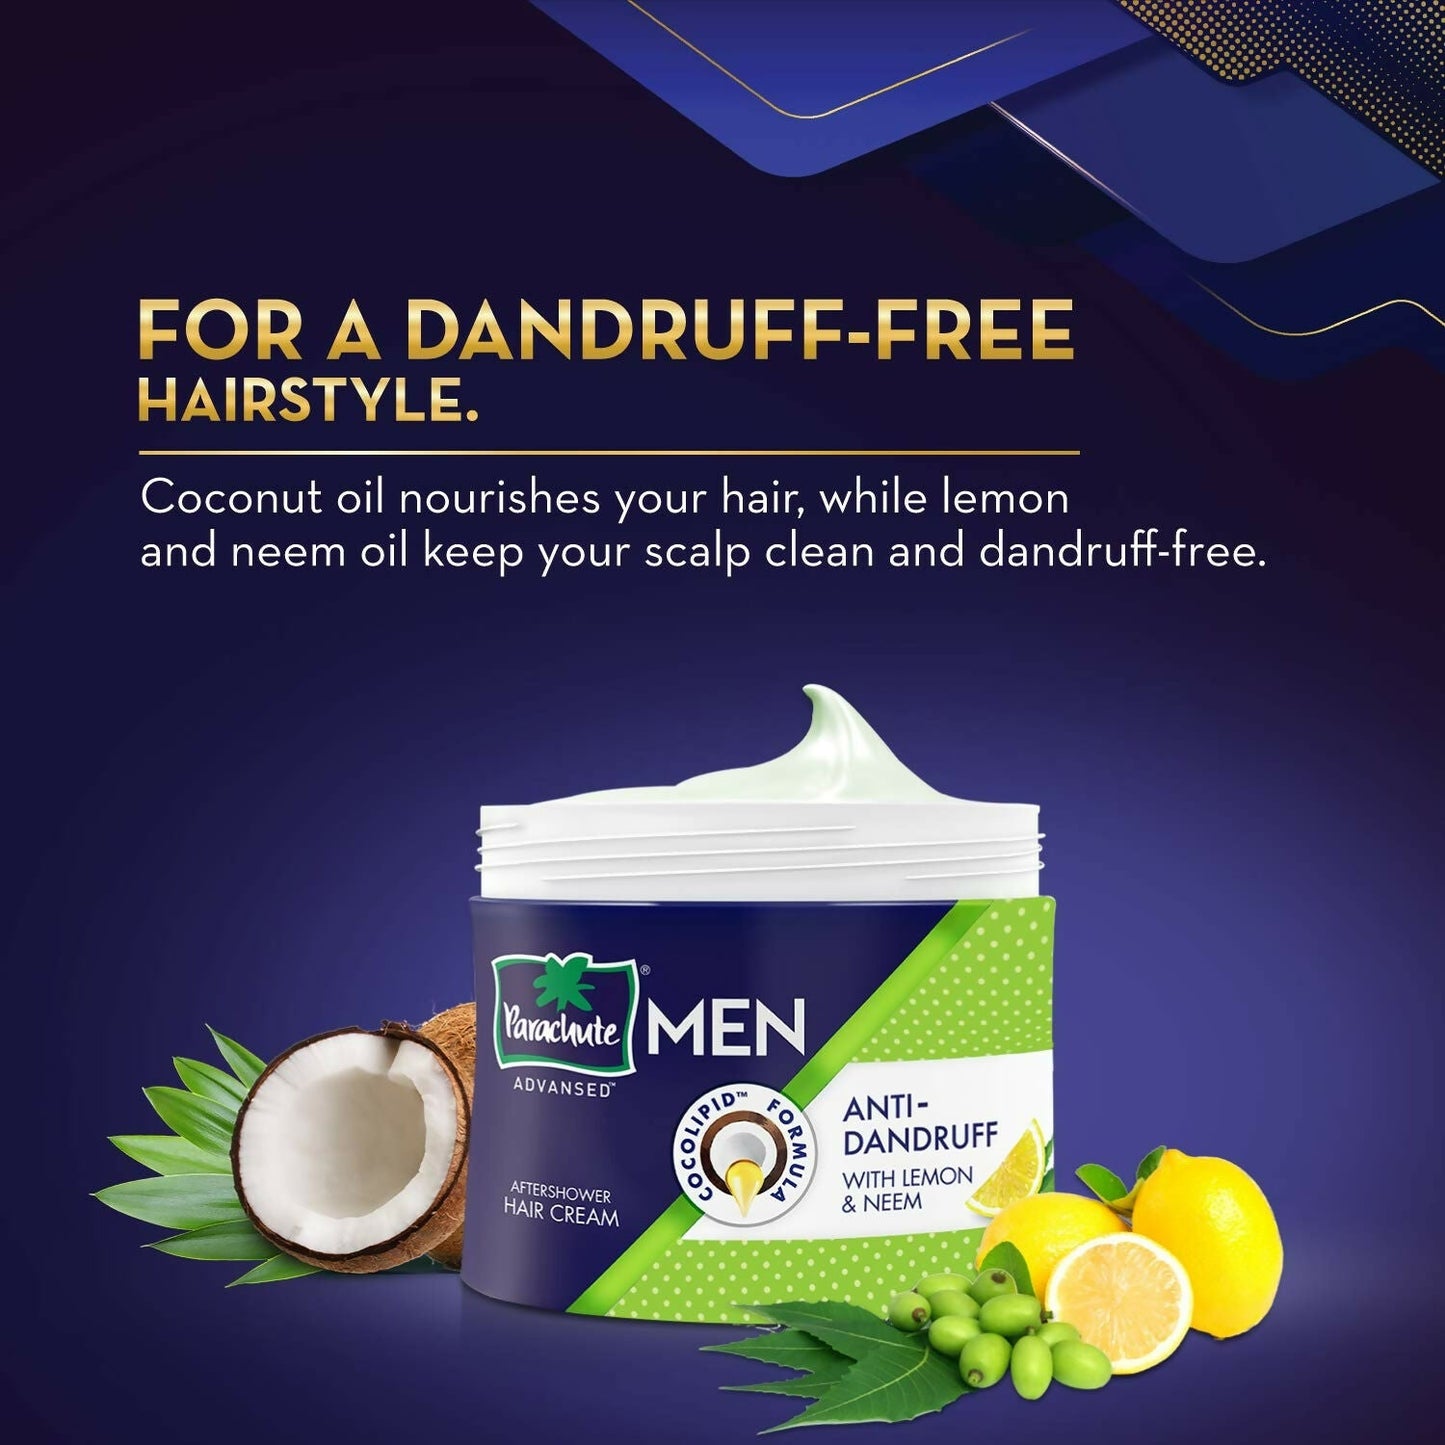 Parachute Advansed Men Hair Cream, Anti-Dandruff, With Lemon & Neem